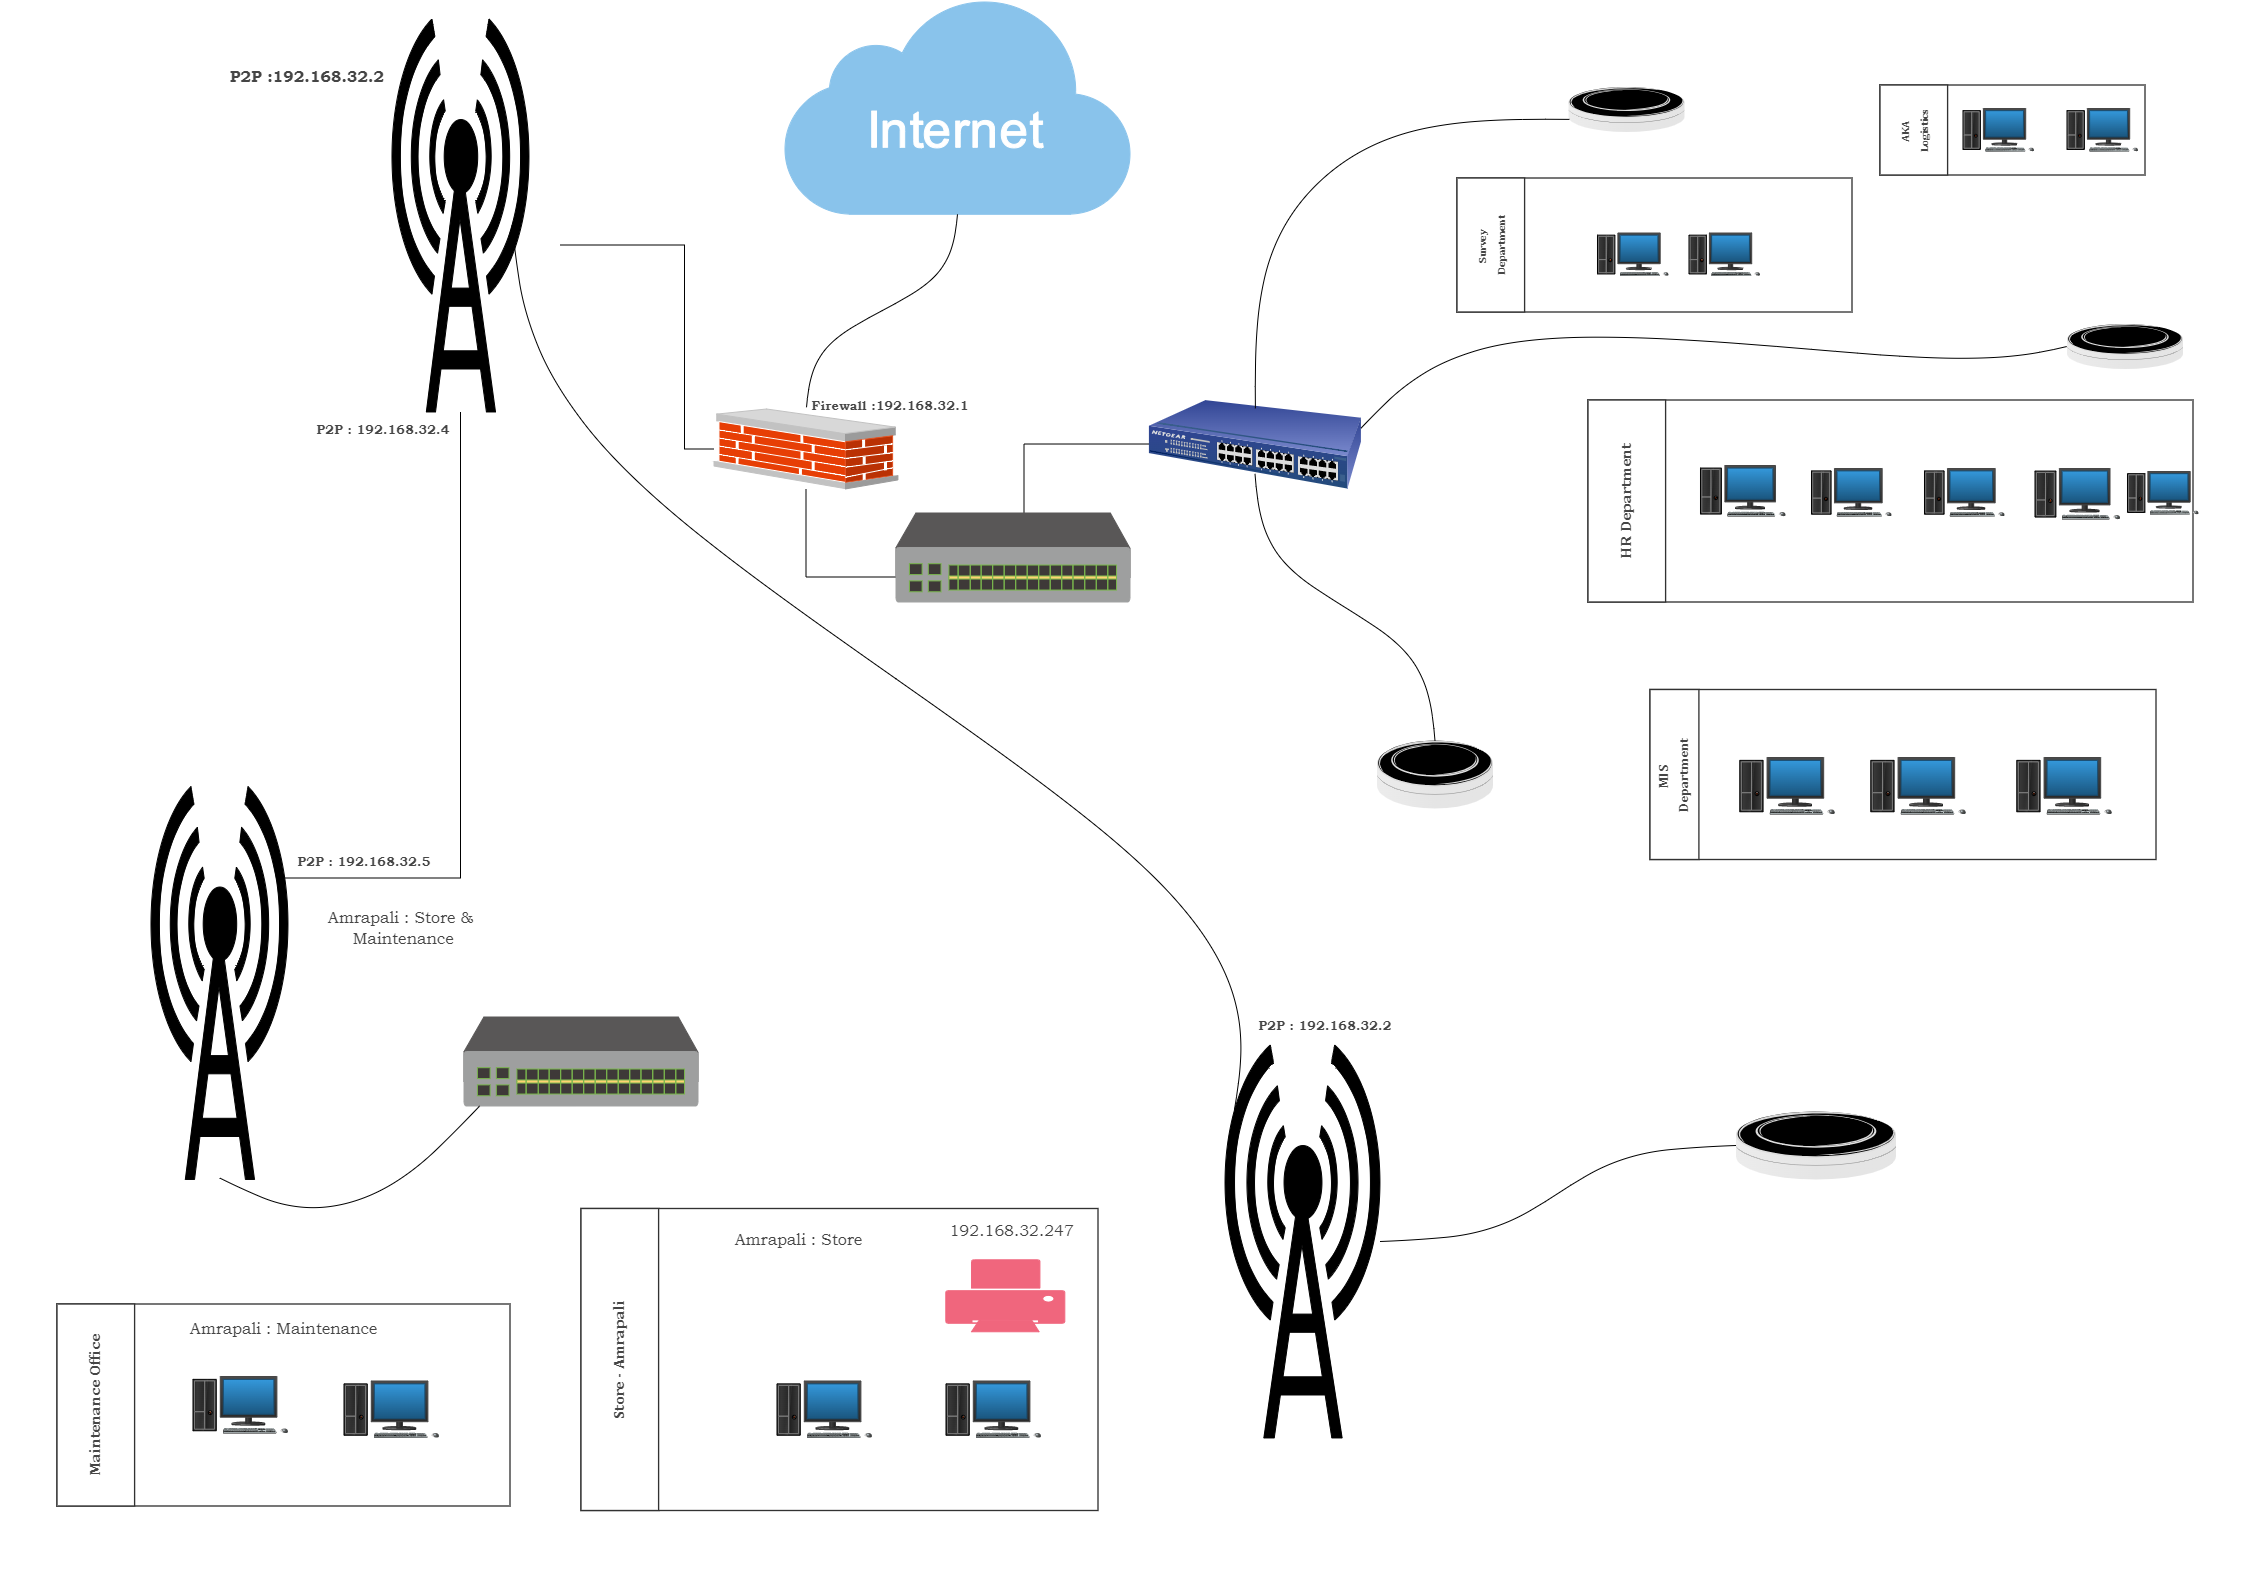 Amrapali Network Diagram